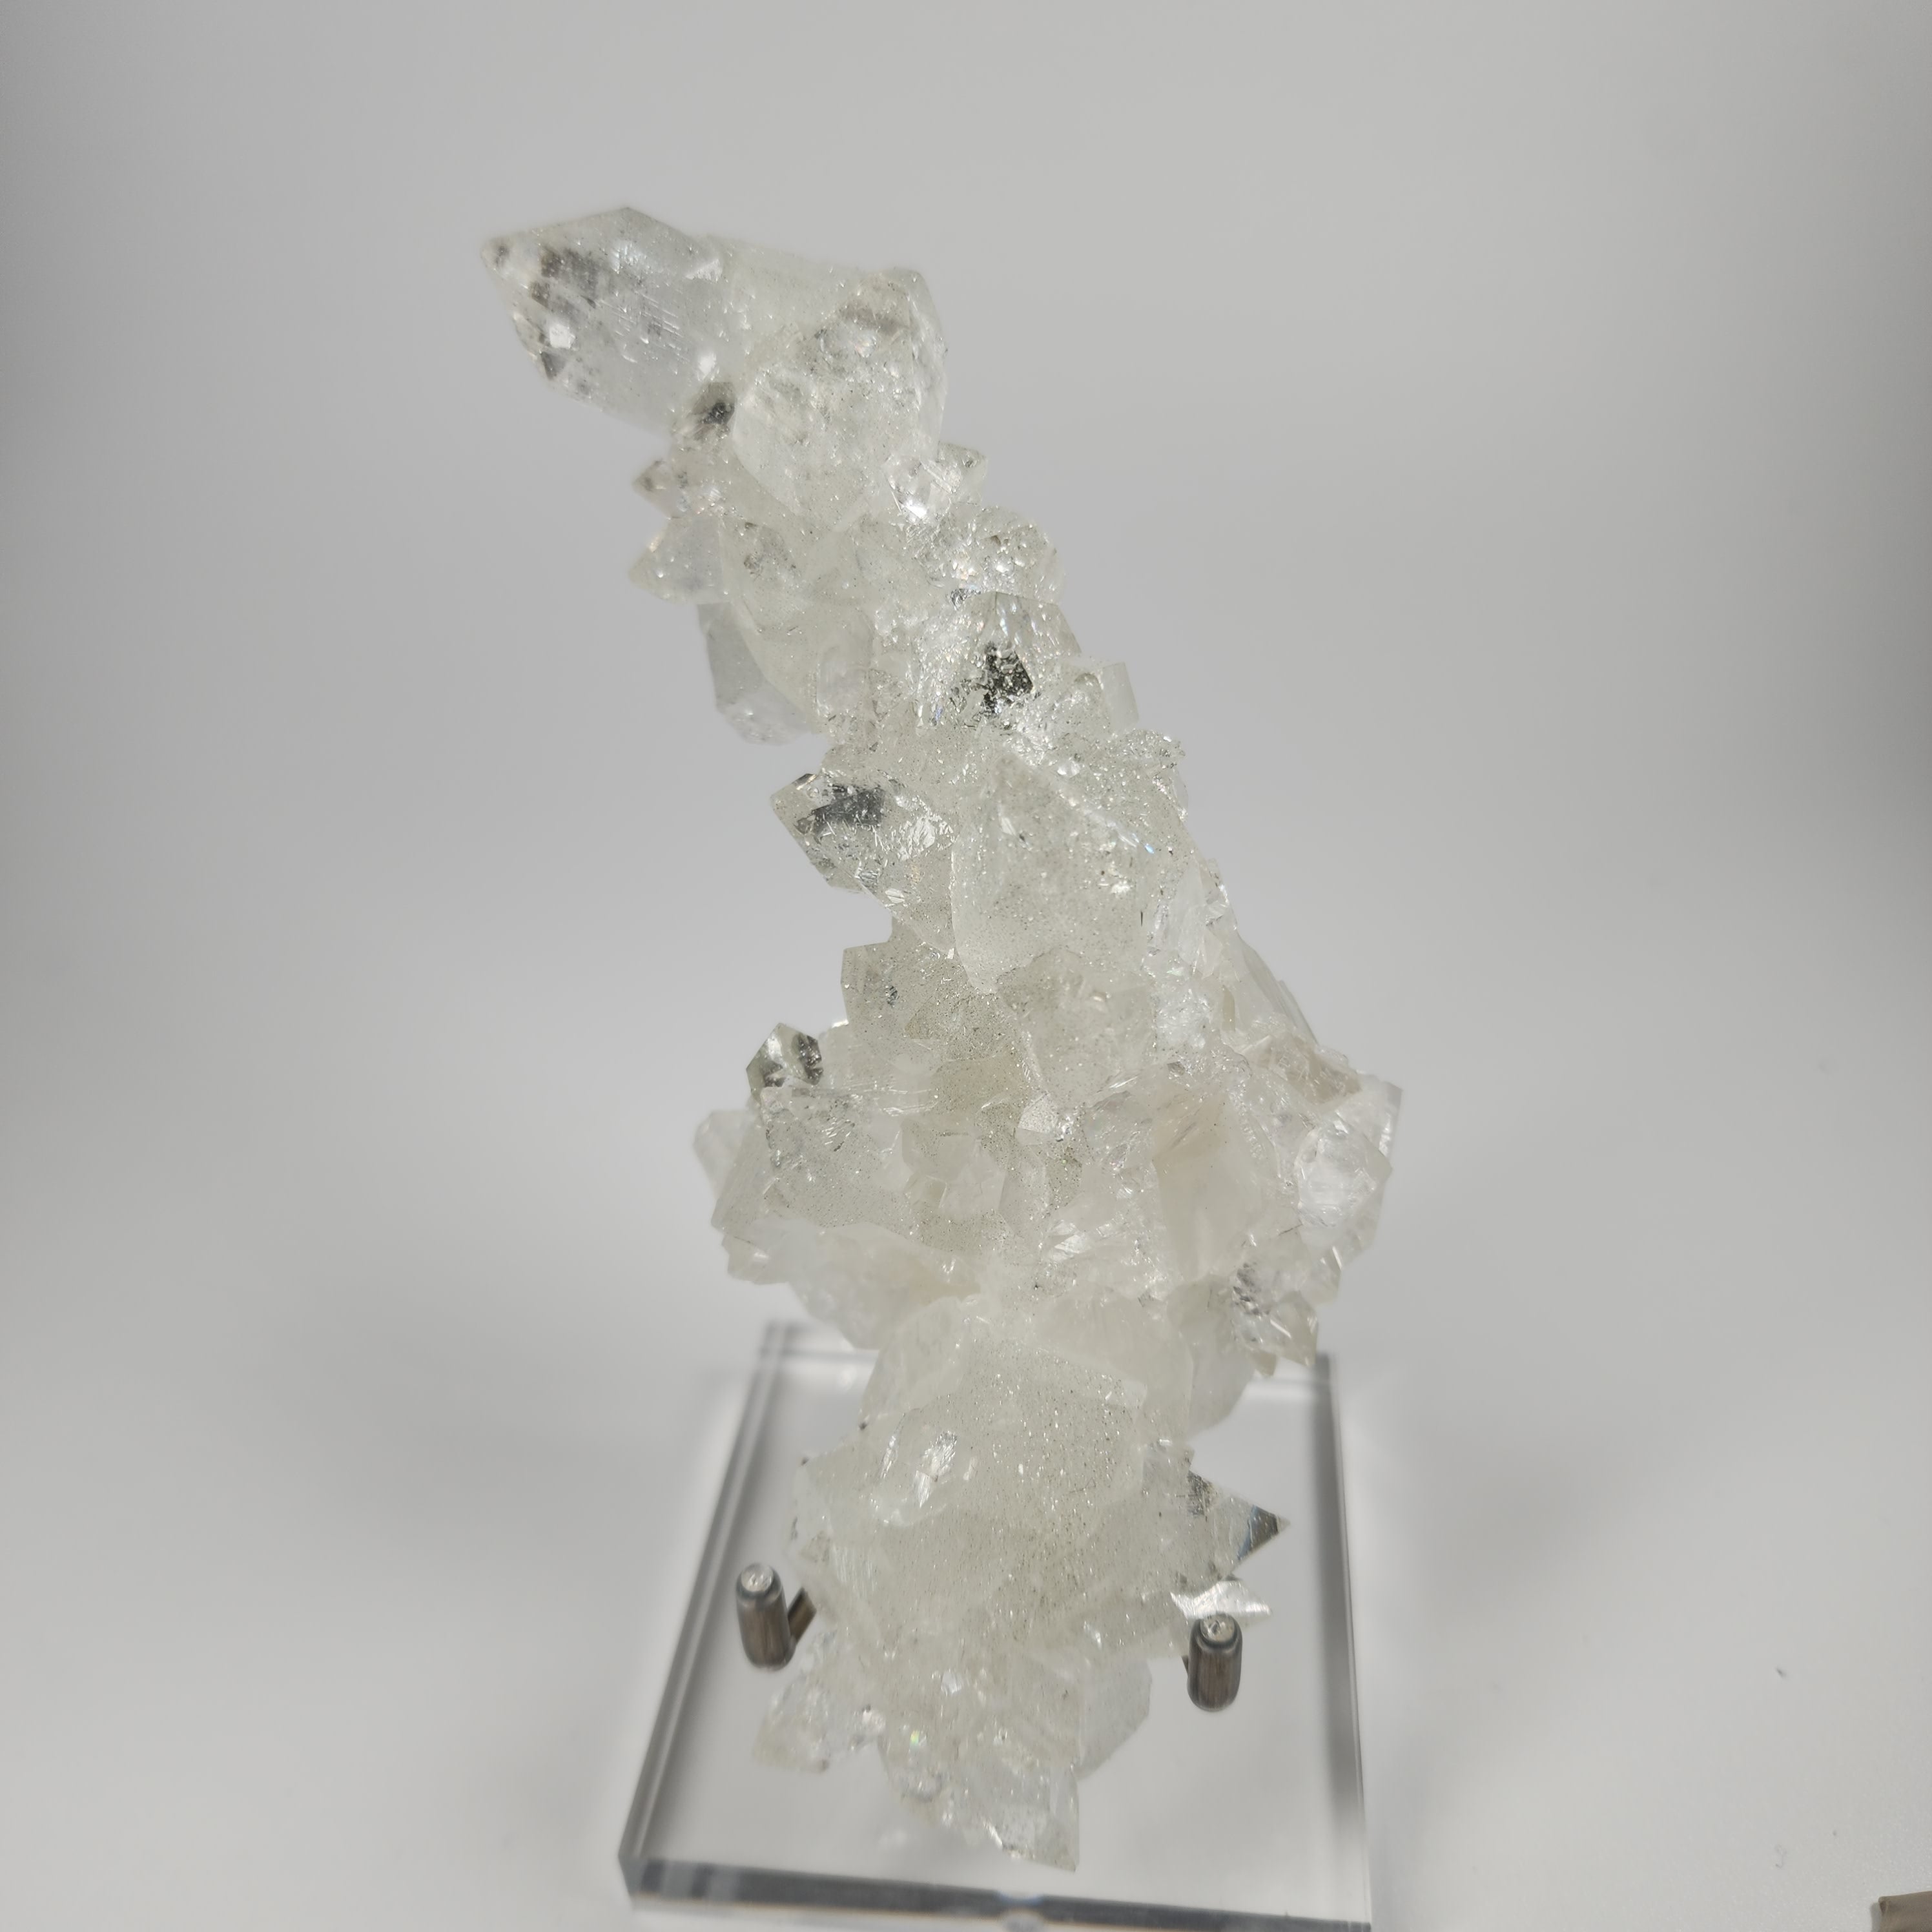 High Quality Diamond Apophyllite Specimen #17 from Jalgaon District, Maharashtra, India